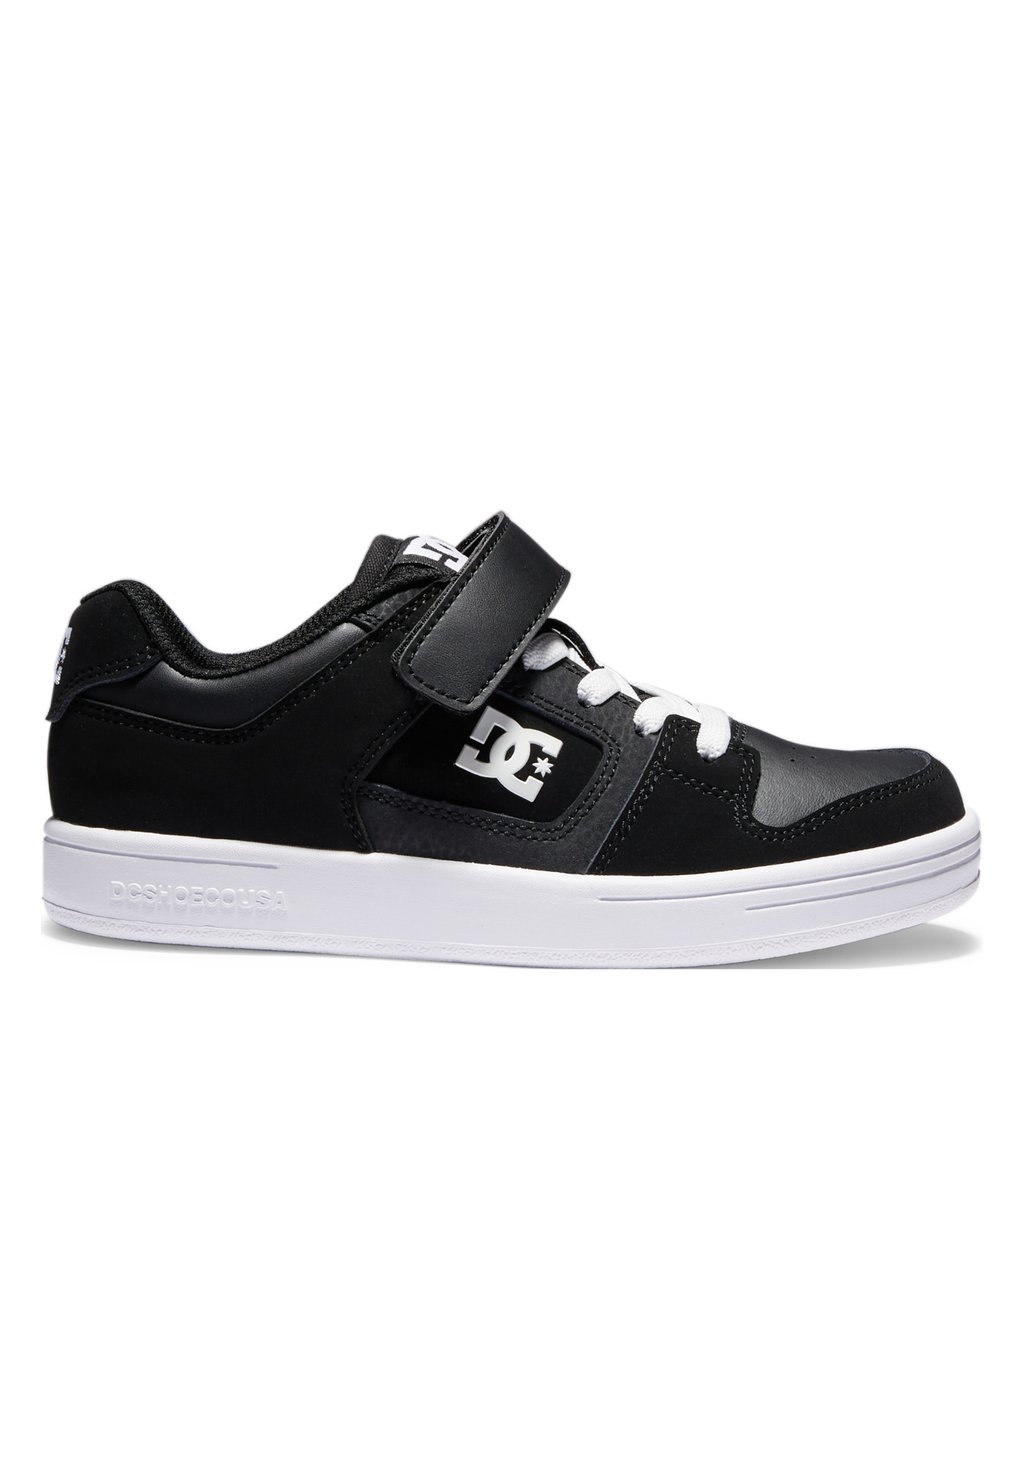 Низкие кроссовки Manteca 4 V DC Shoes, цвет black black white кроссовки pure dc цвет black black white